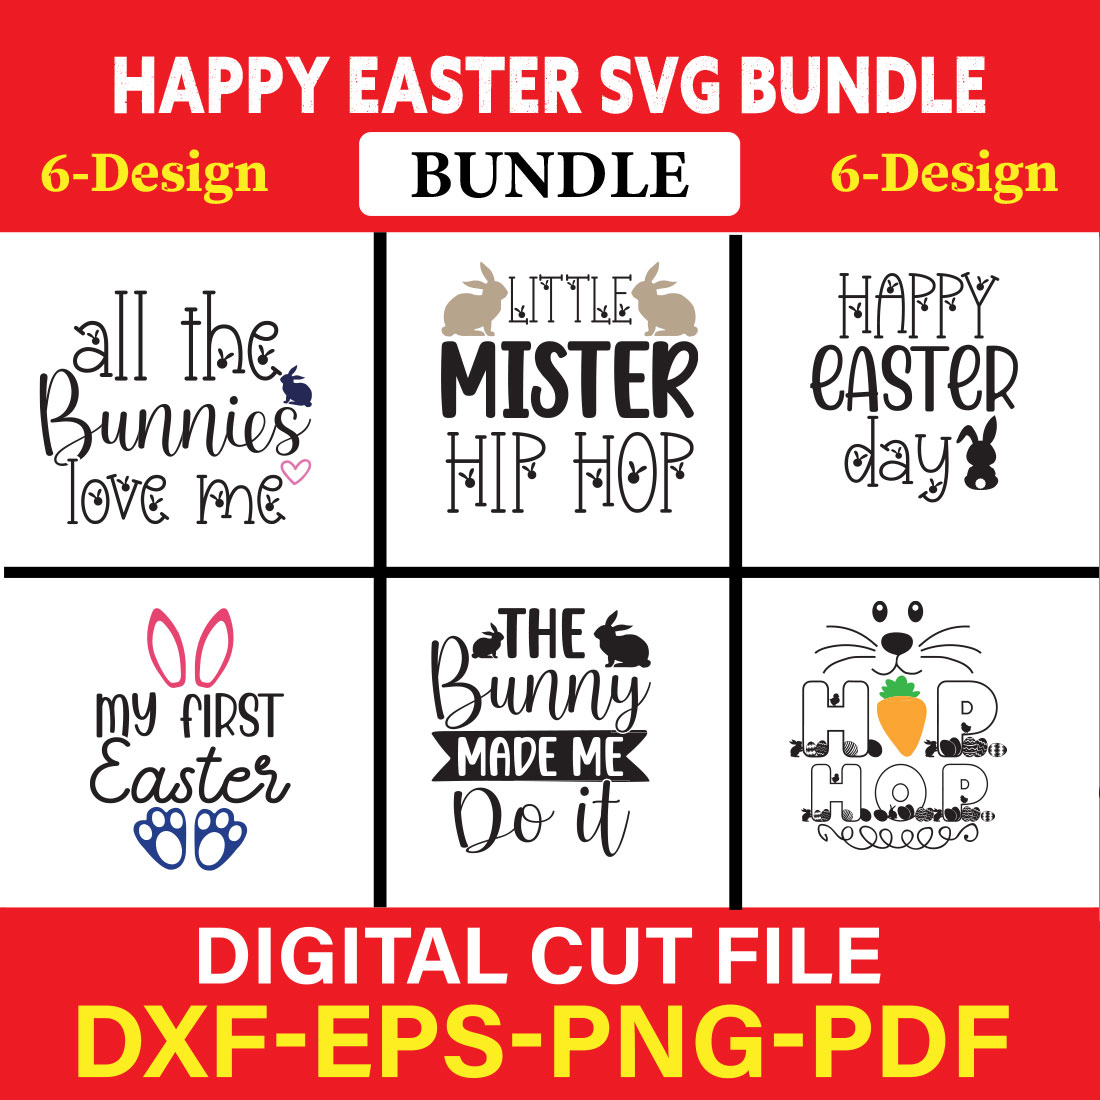 Happy Easter T-shirt Design Bundle Vol-1 cover image.